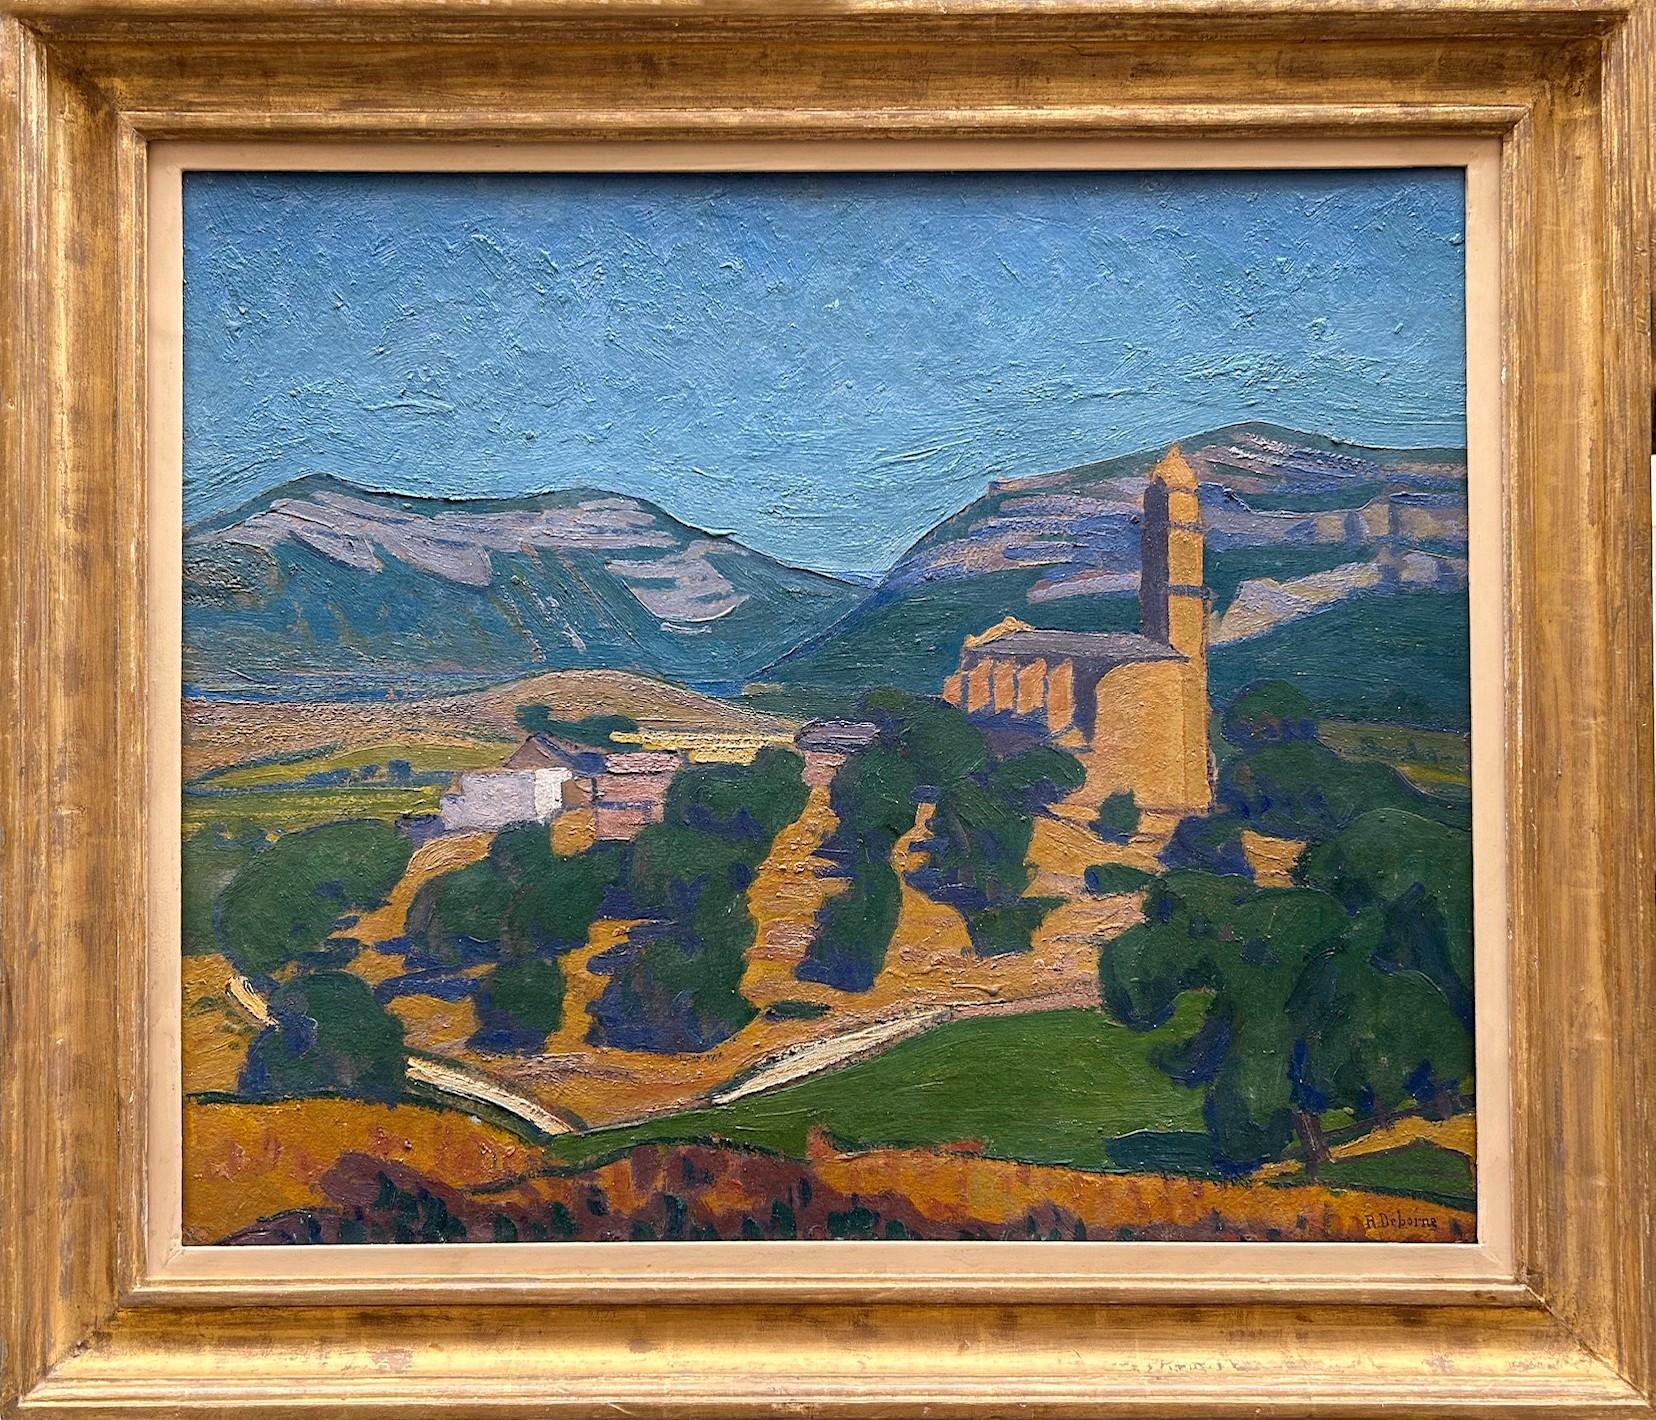 Robert Deborne Landscape Painting - Eglise San Martinu de Patrimonio, Signed Oil on Canvas French Post-Impressionist